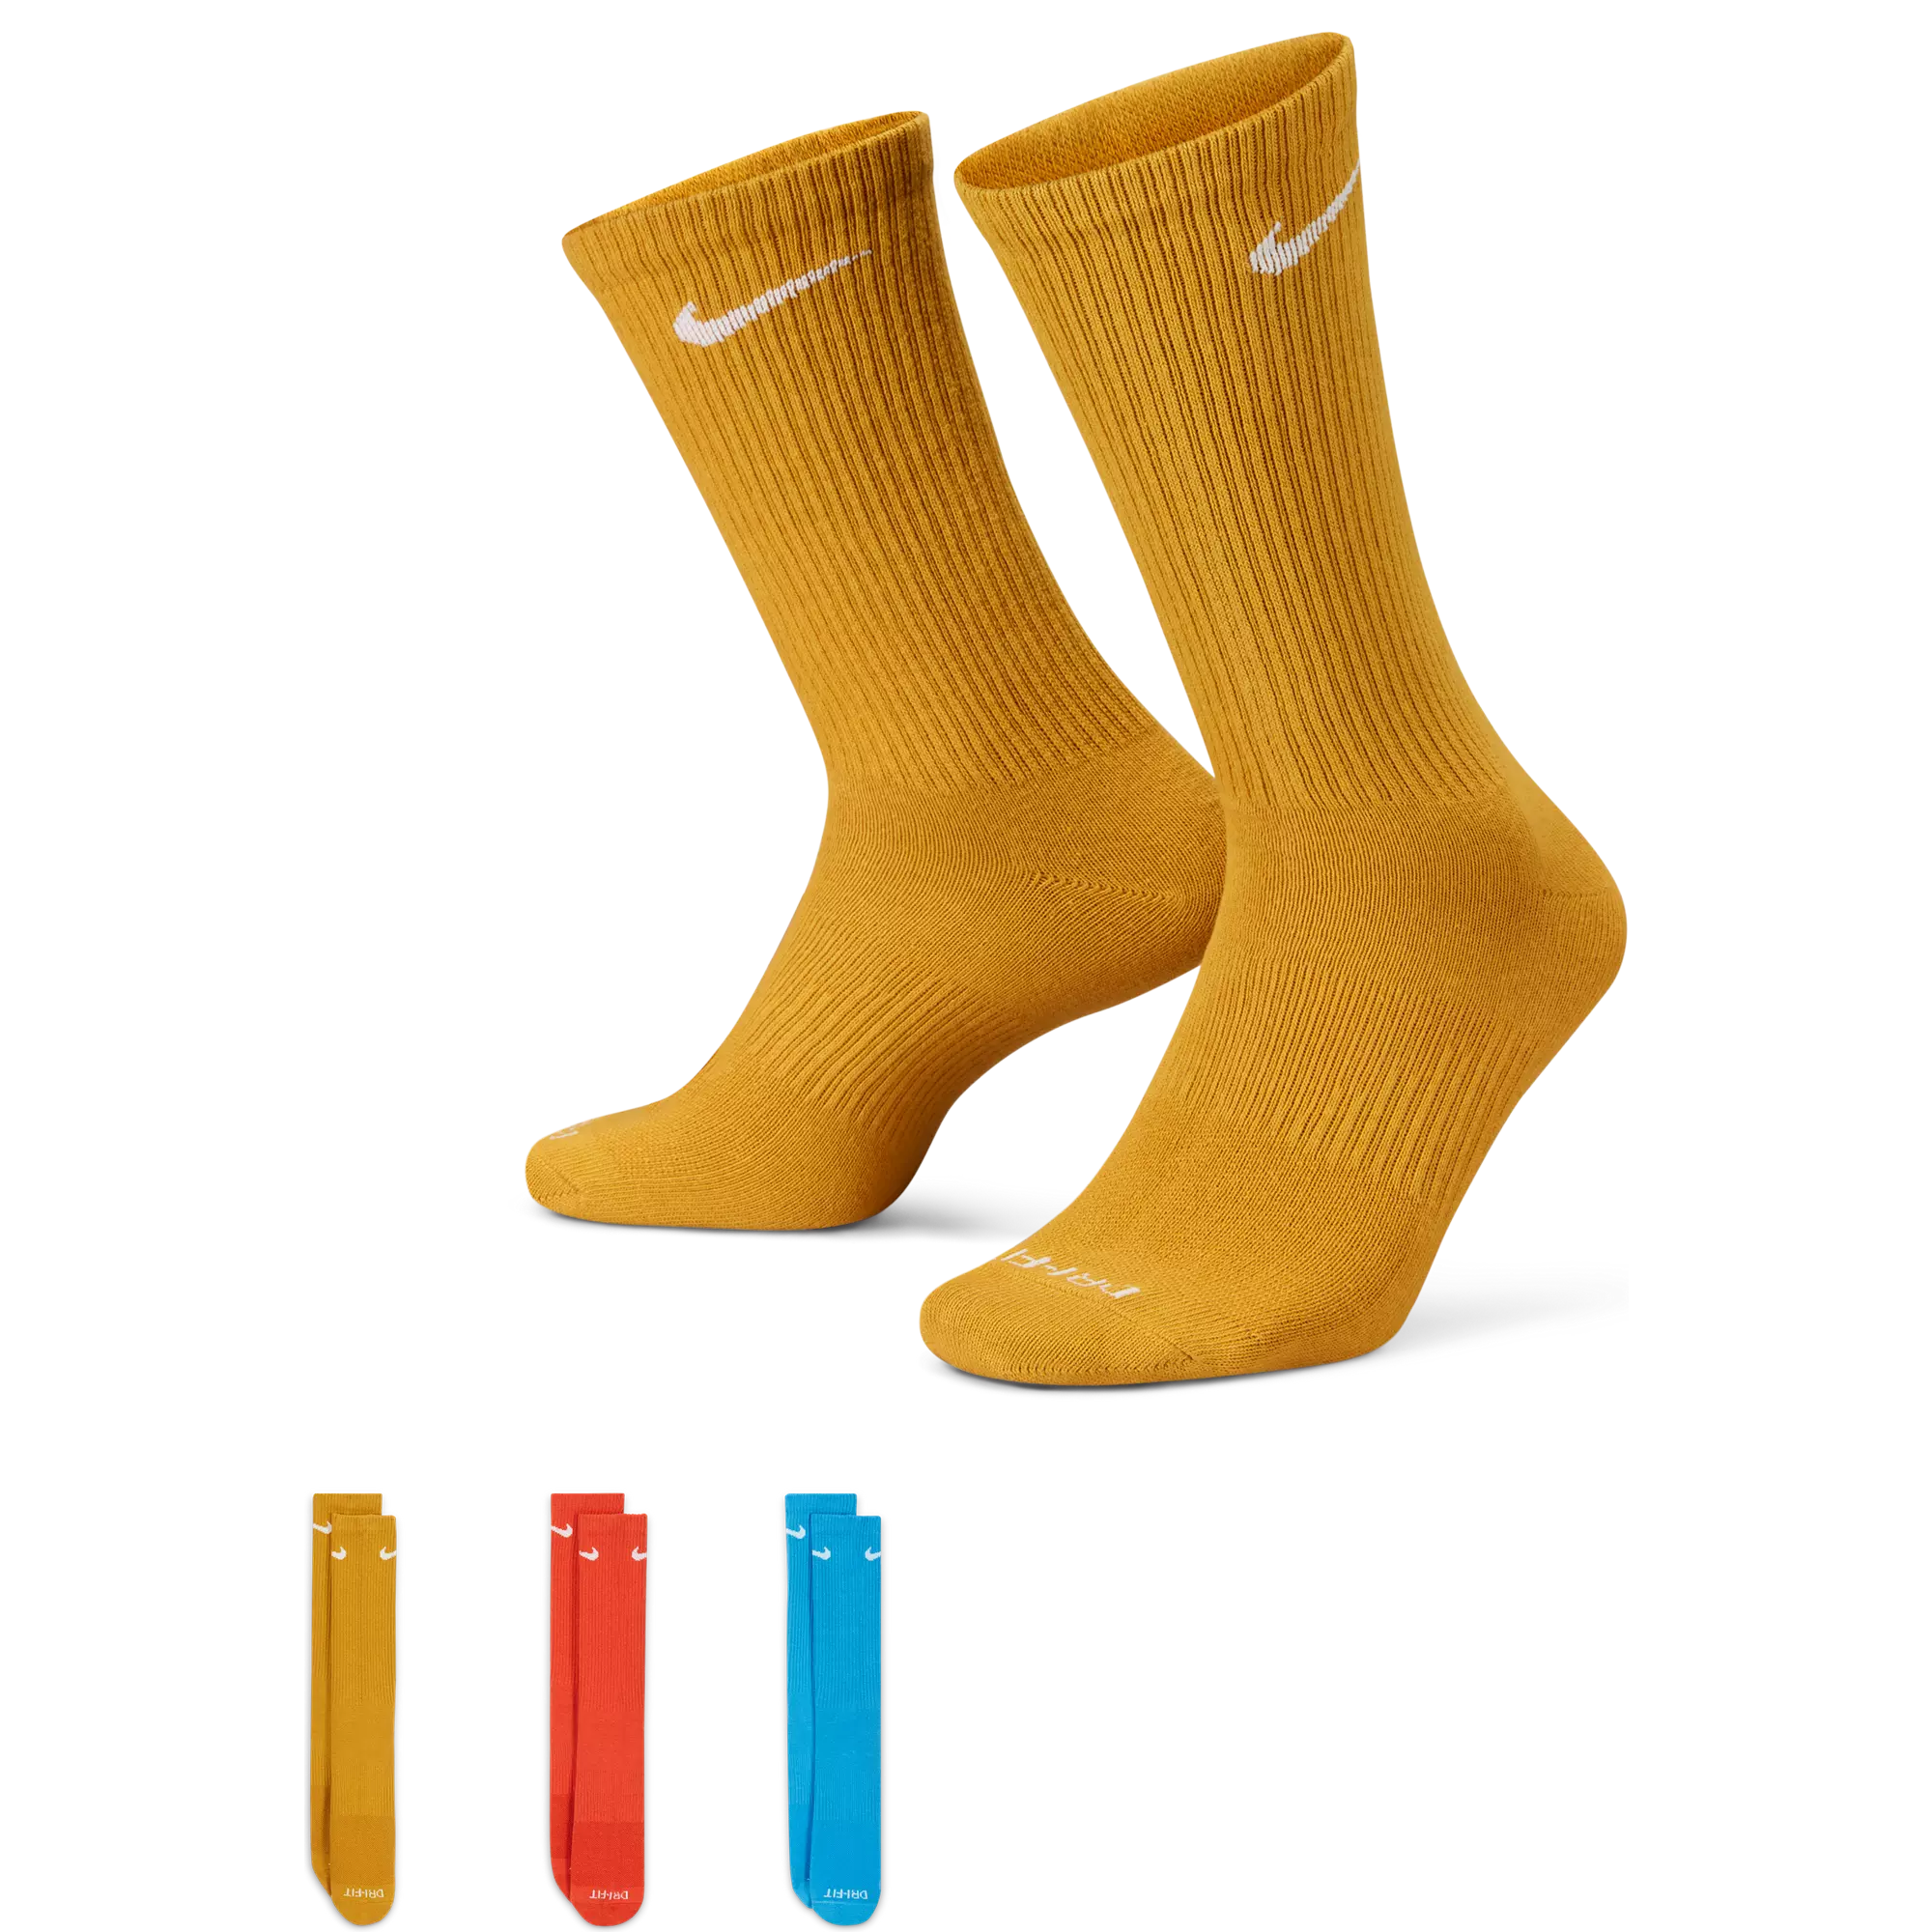 Nike Everyday Lightweight Training Crew Socks (3 Pairs)